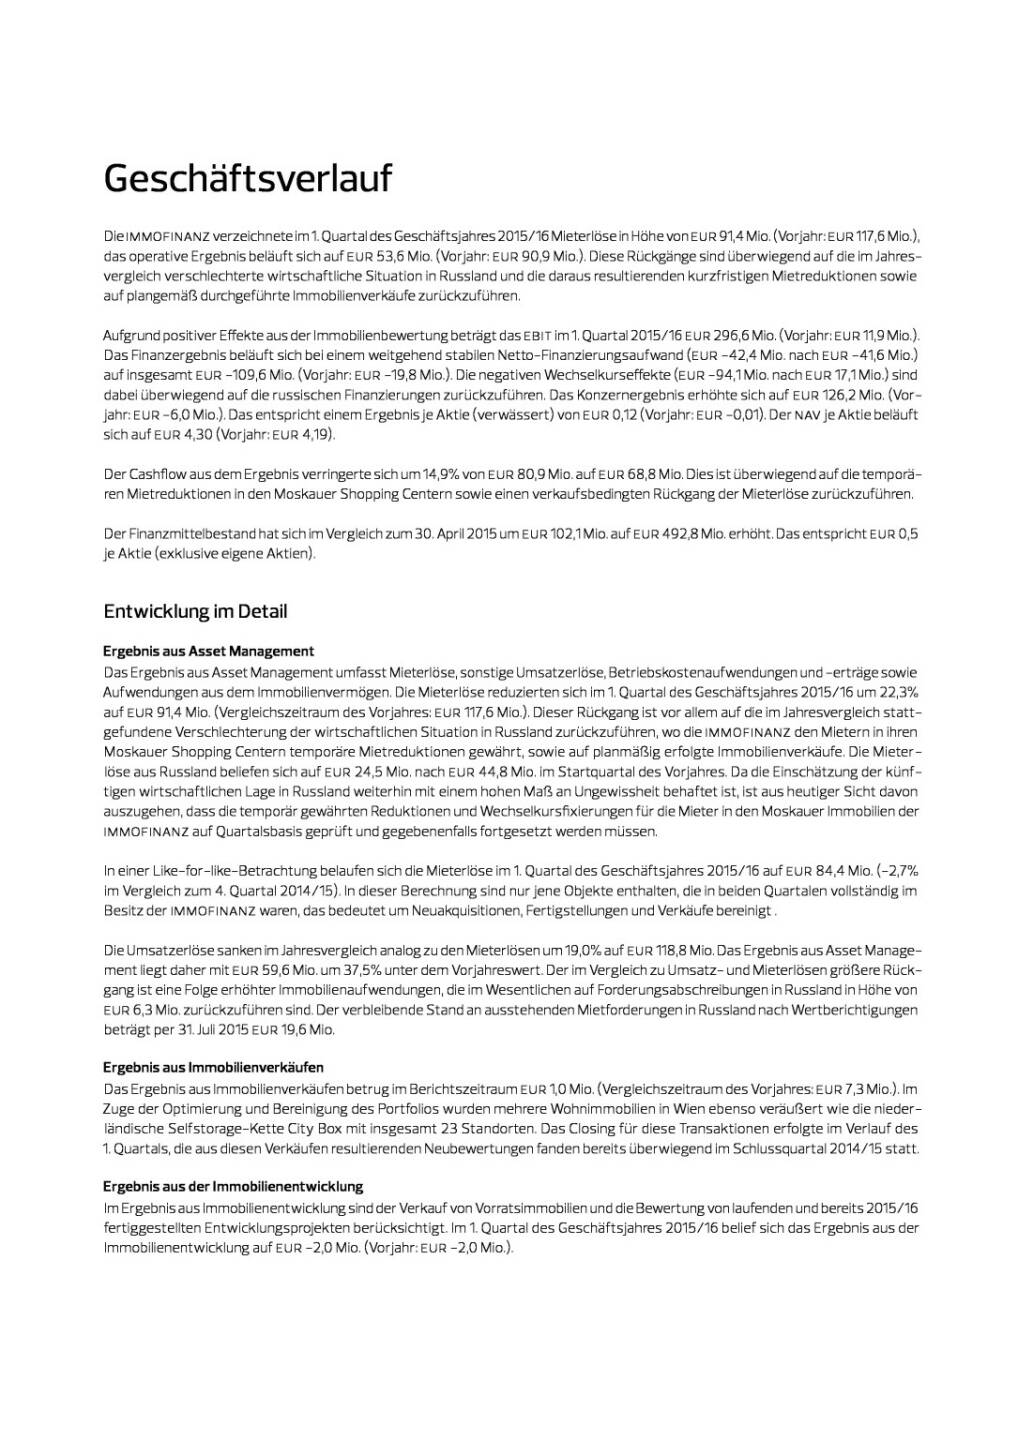 Immofinanz Geschäftsverlauf, Seite 1/4, komplettes Dokument unter http://boerse-social.com/static/uploads/file_370_immofinanz_geschaftsverlauf.pdf